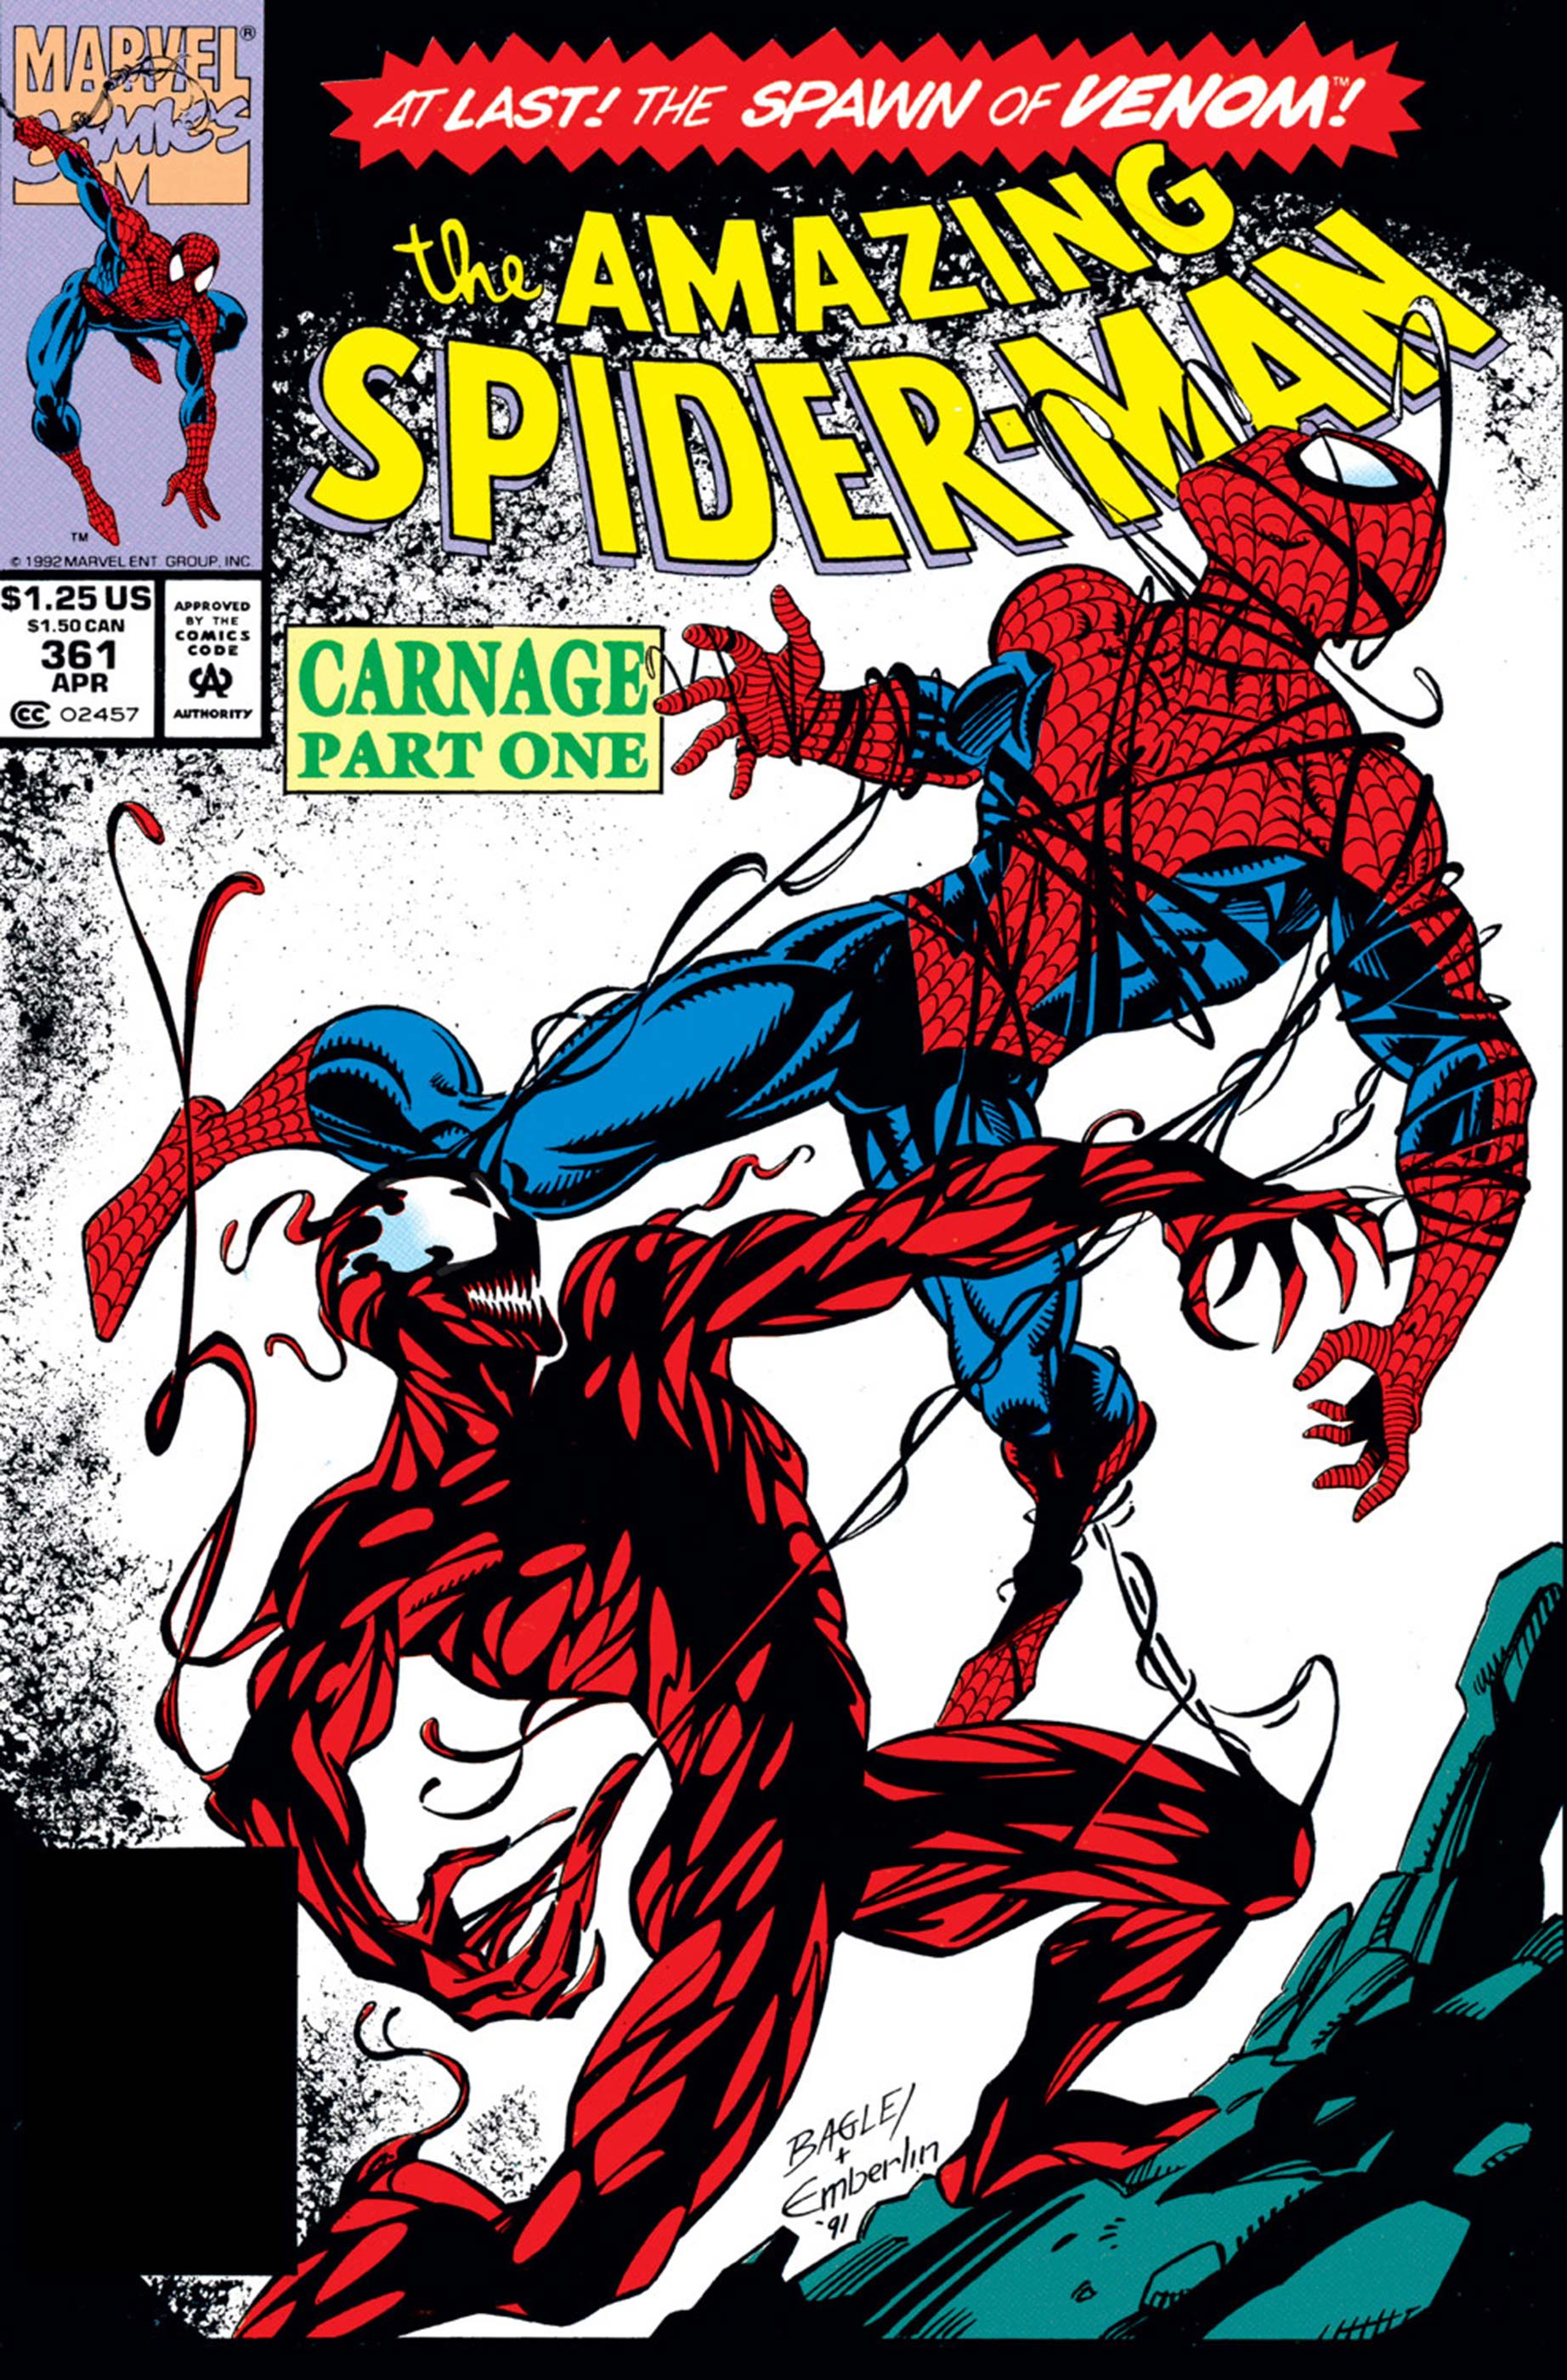 The Amazing Spider-Man (1963) #361